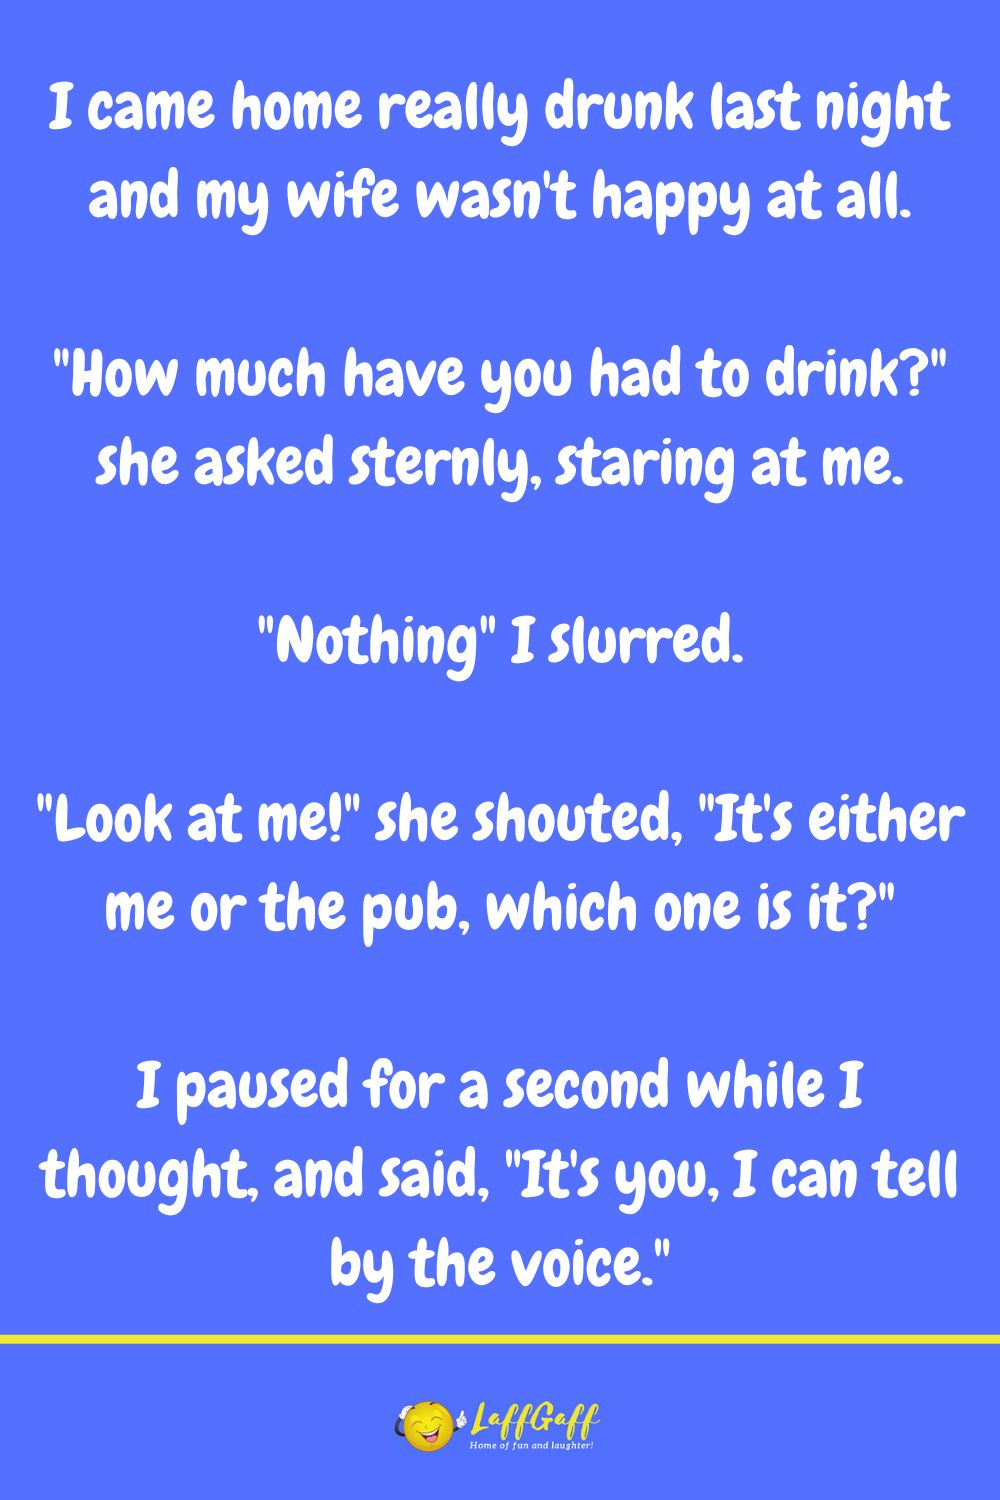 Drunk husband joke from LaffGaff.